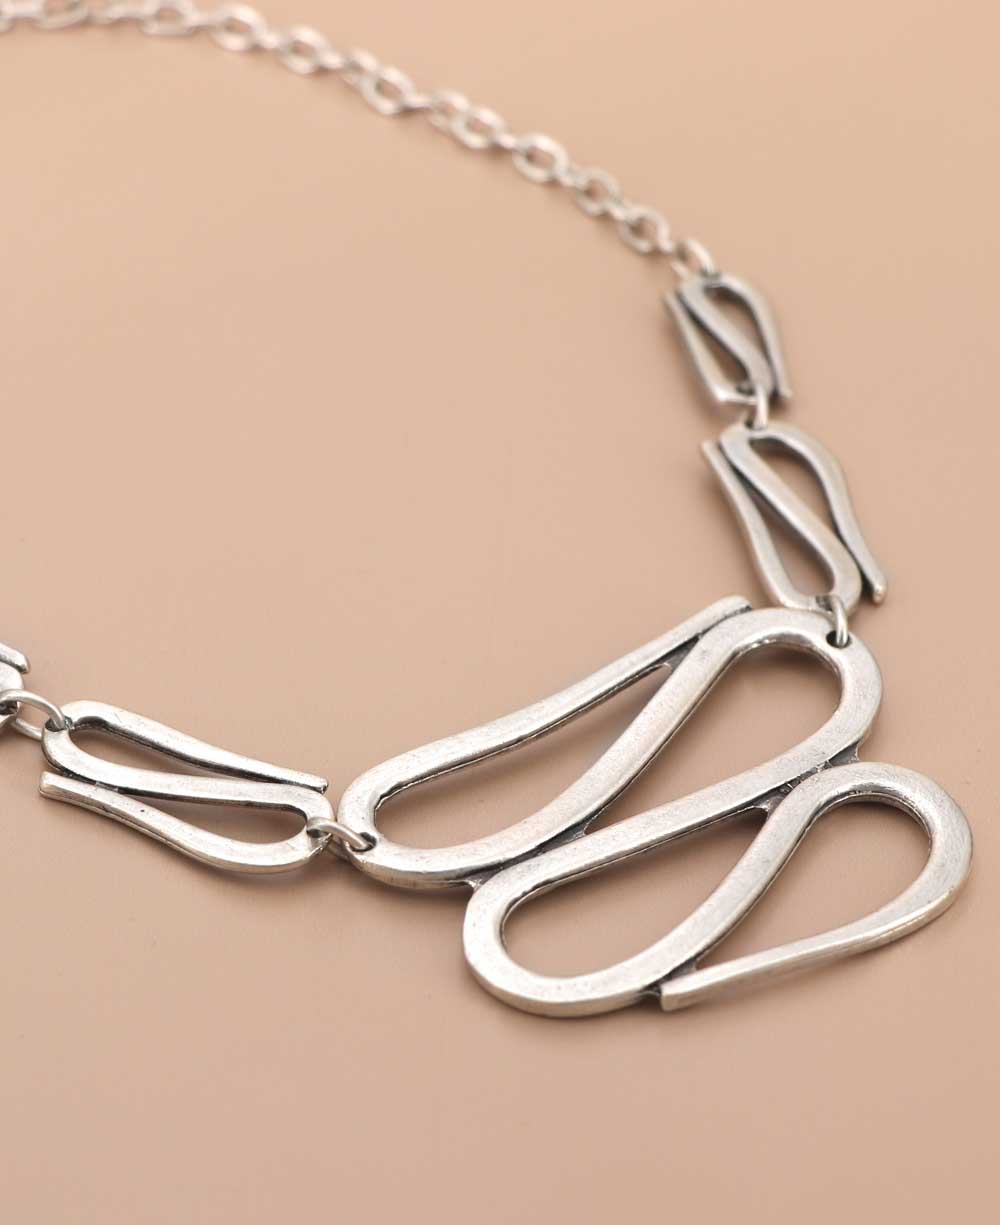 Adjustable swirly necklace